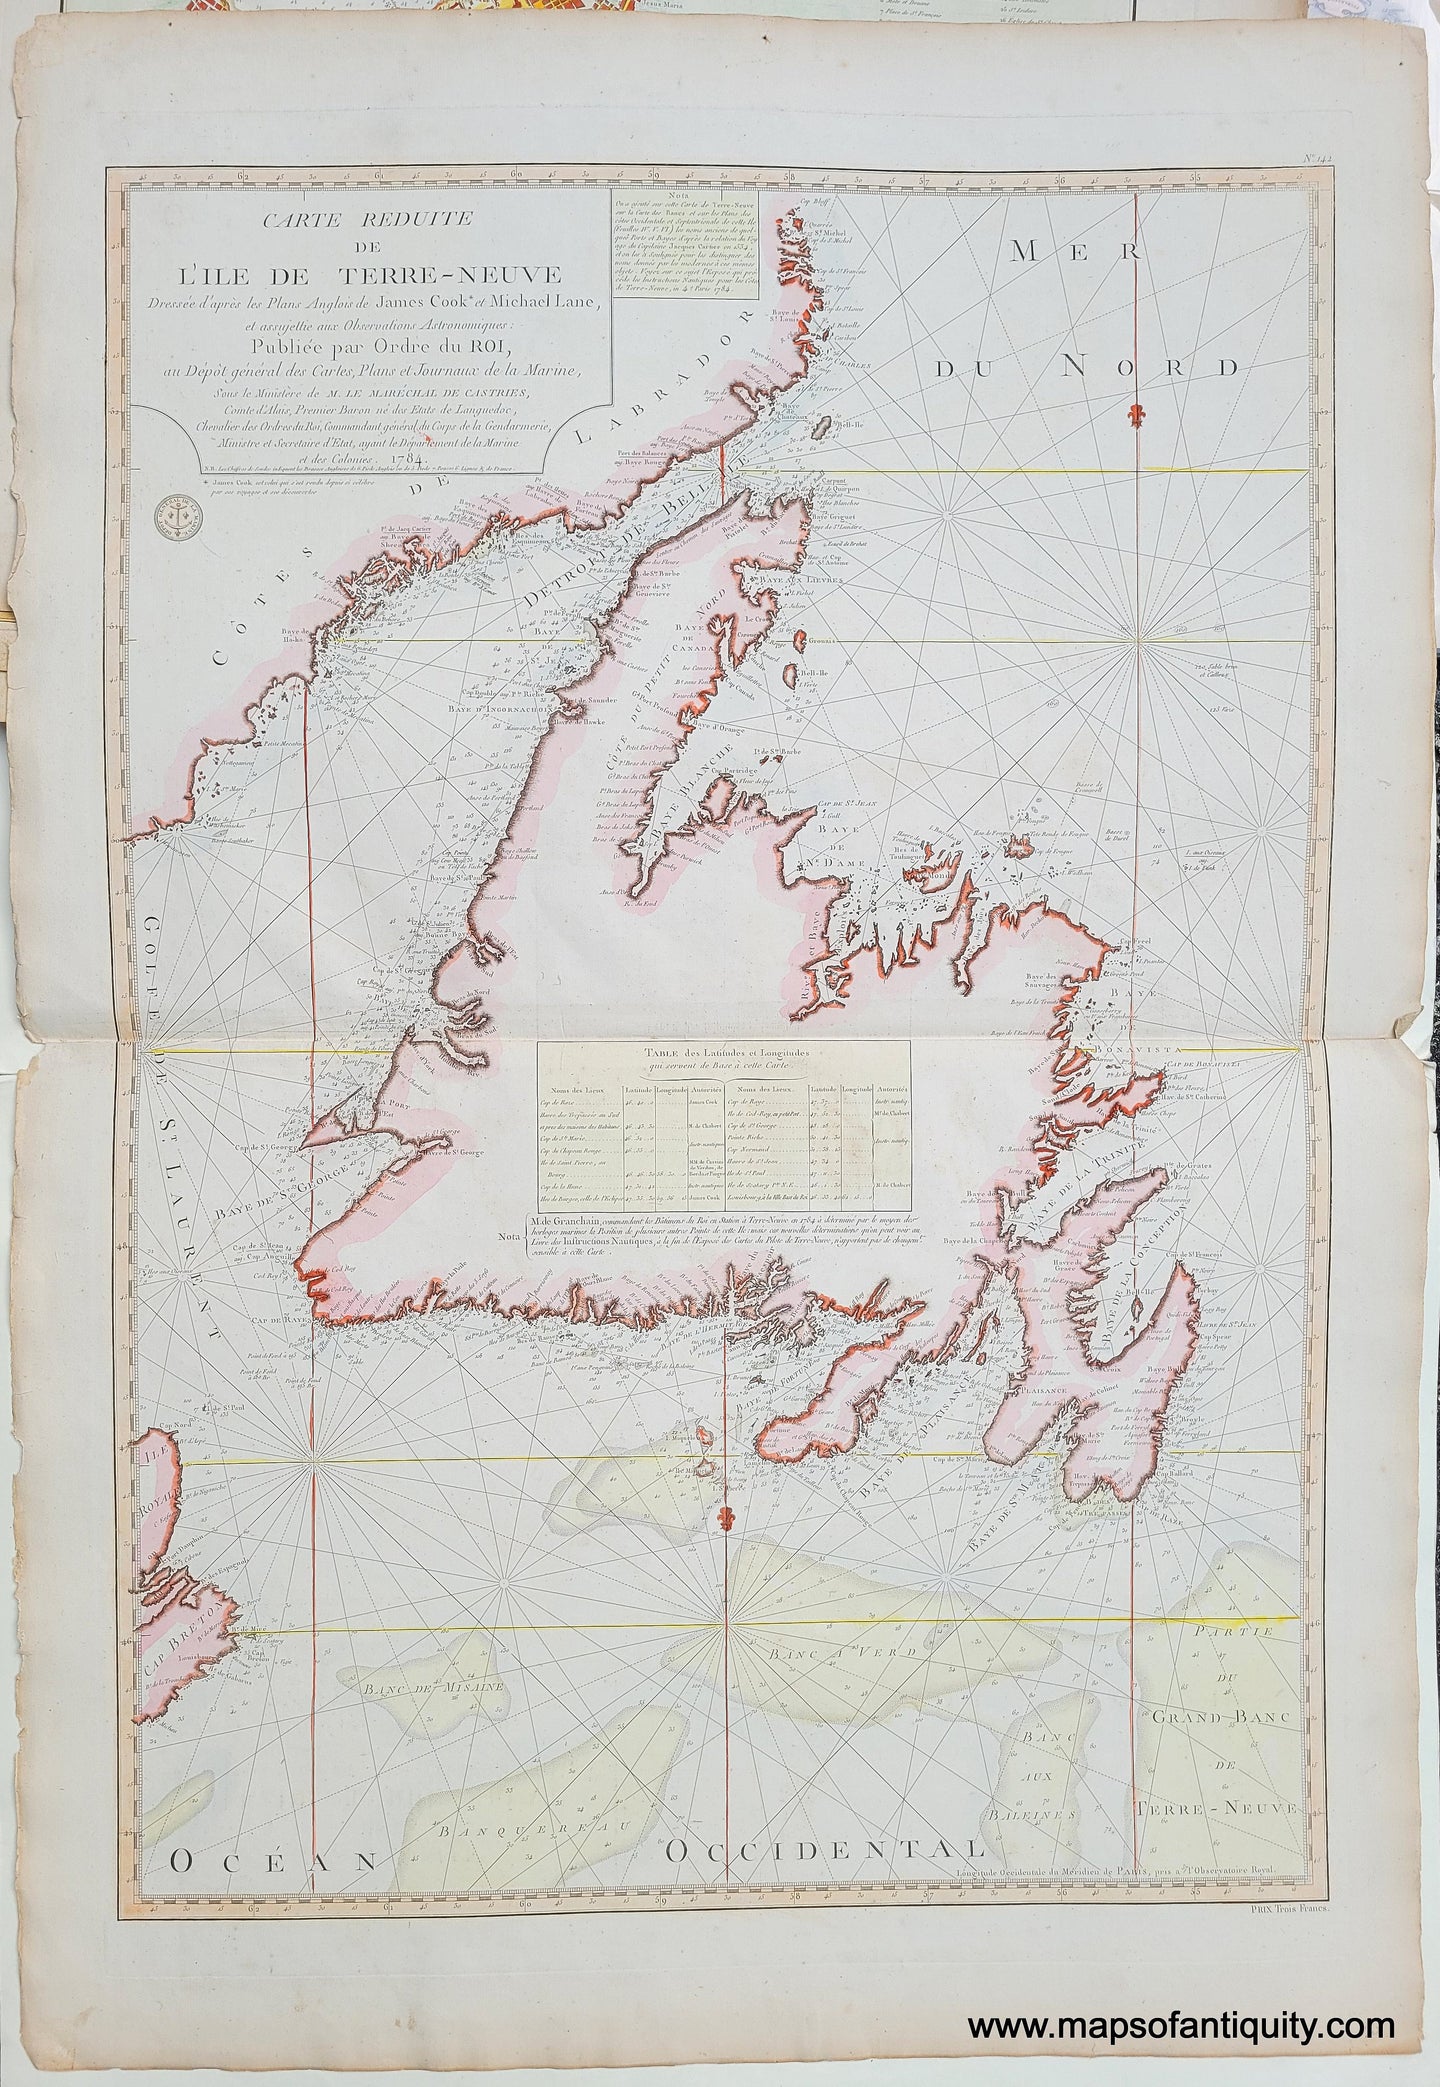 Genuine-Antique-Map-Newfoundland---Carte-reduite-de-l-Ile-de-Terre-Neuve-1784-Depot-General-de-la-Marine-Maps-Of-Antiquity